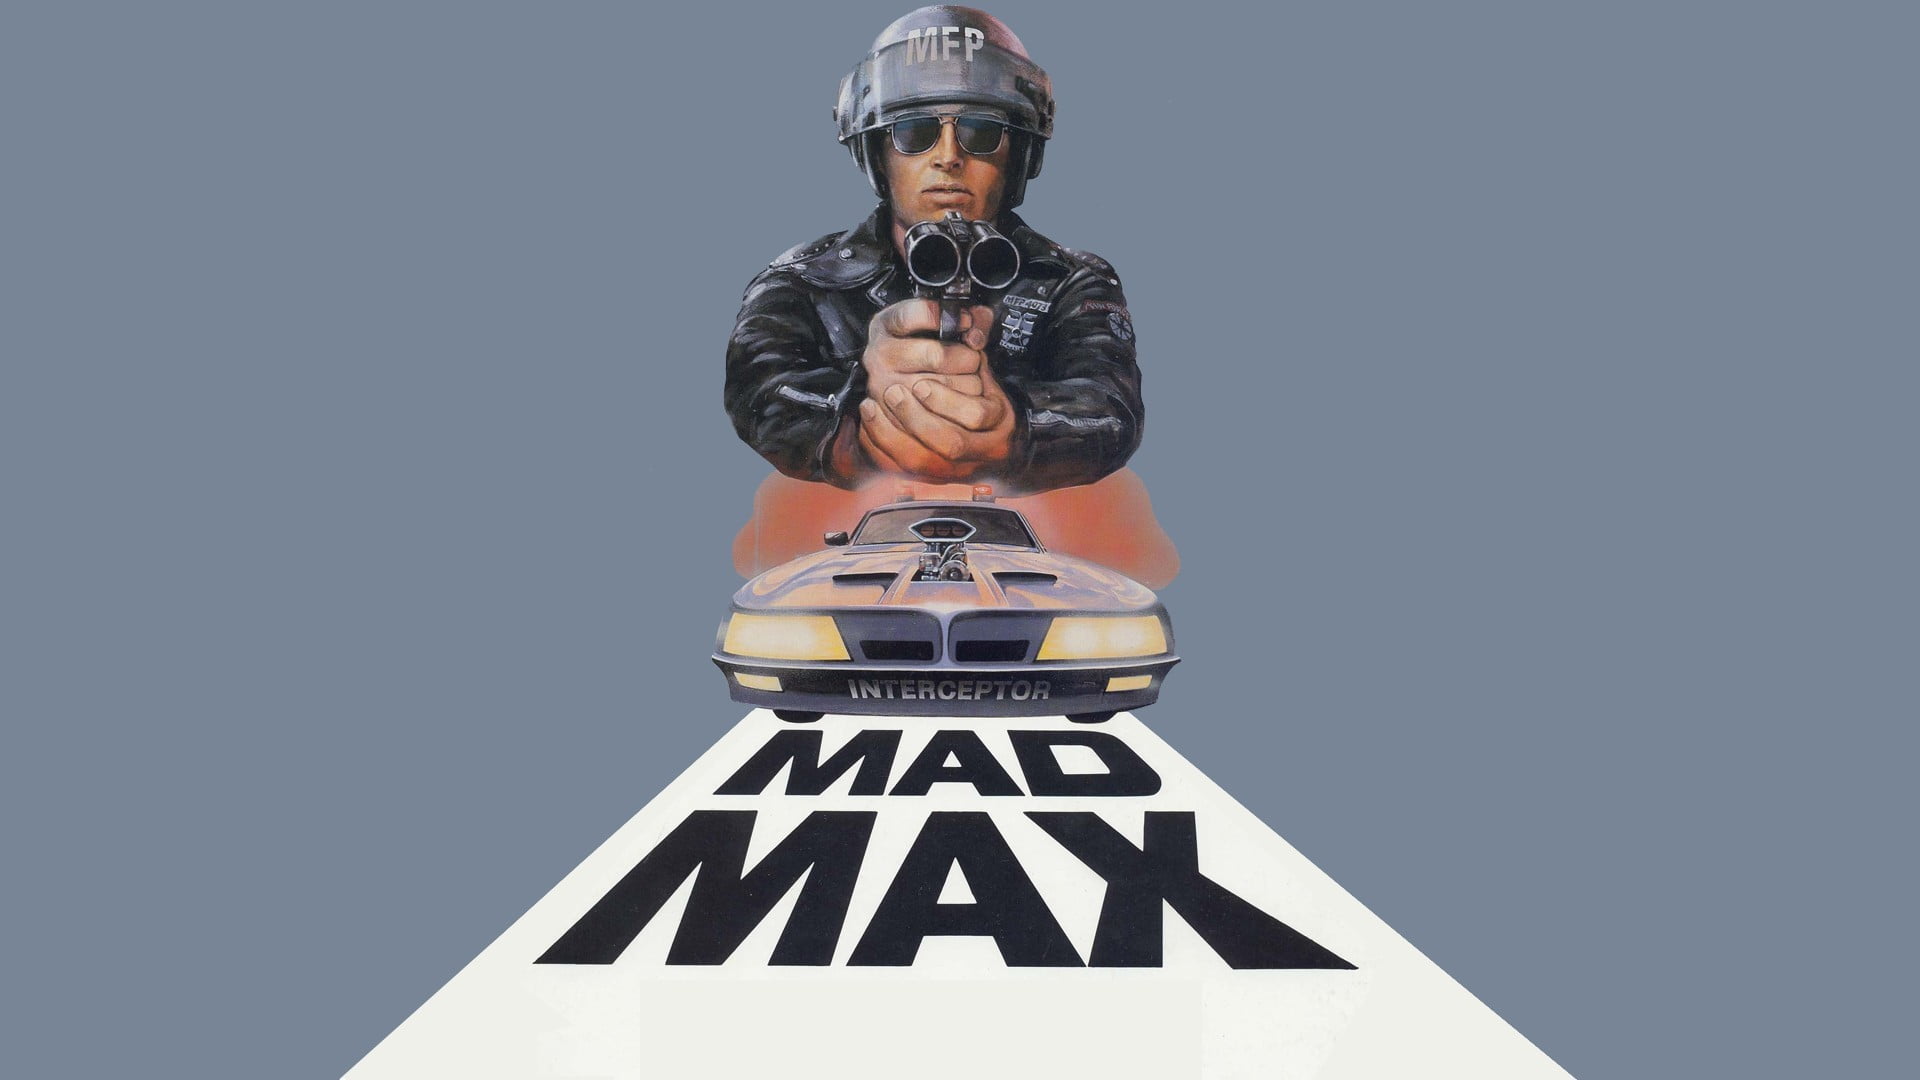 Mad Max digital wallpaper, movies, Mel Gibson, Mad Max